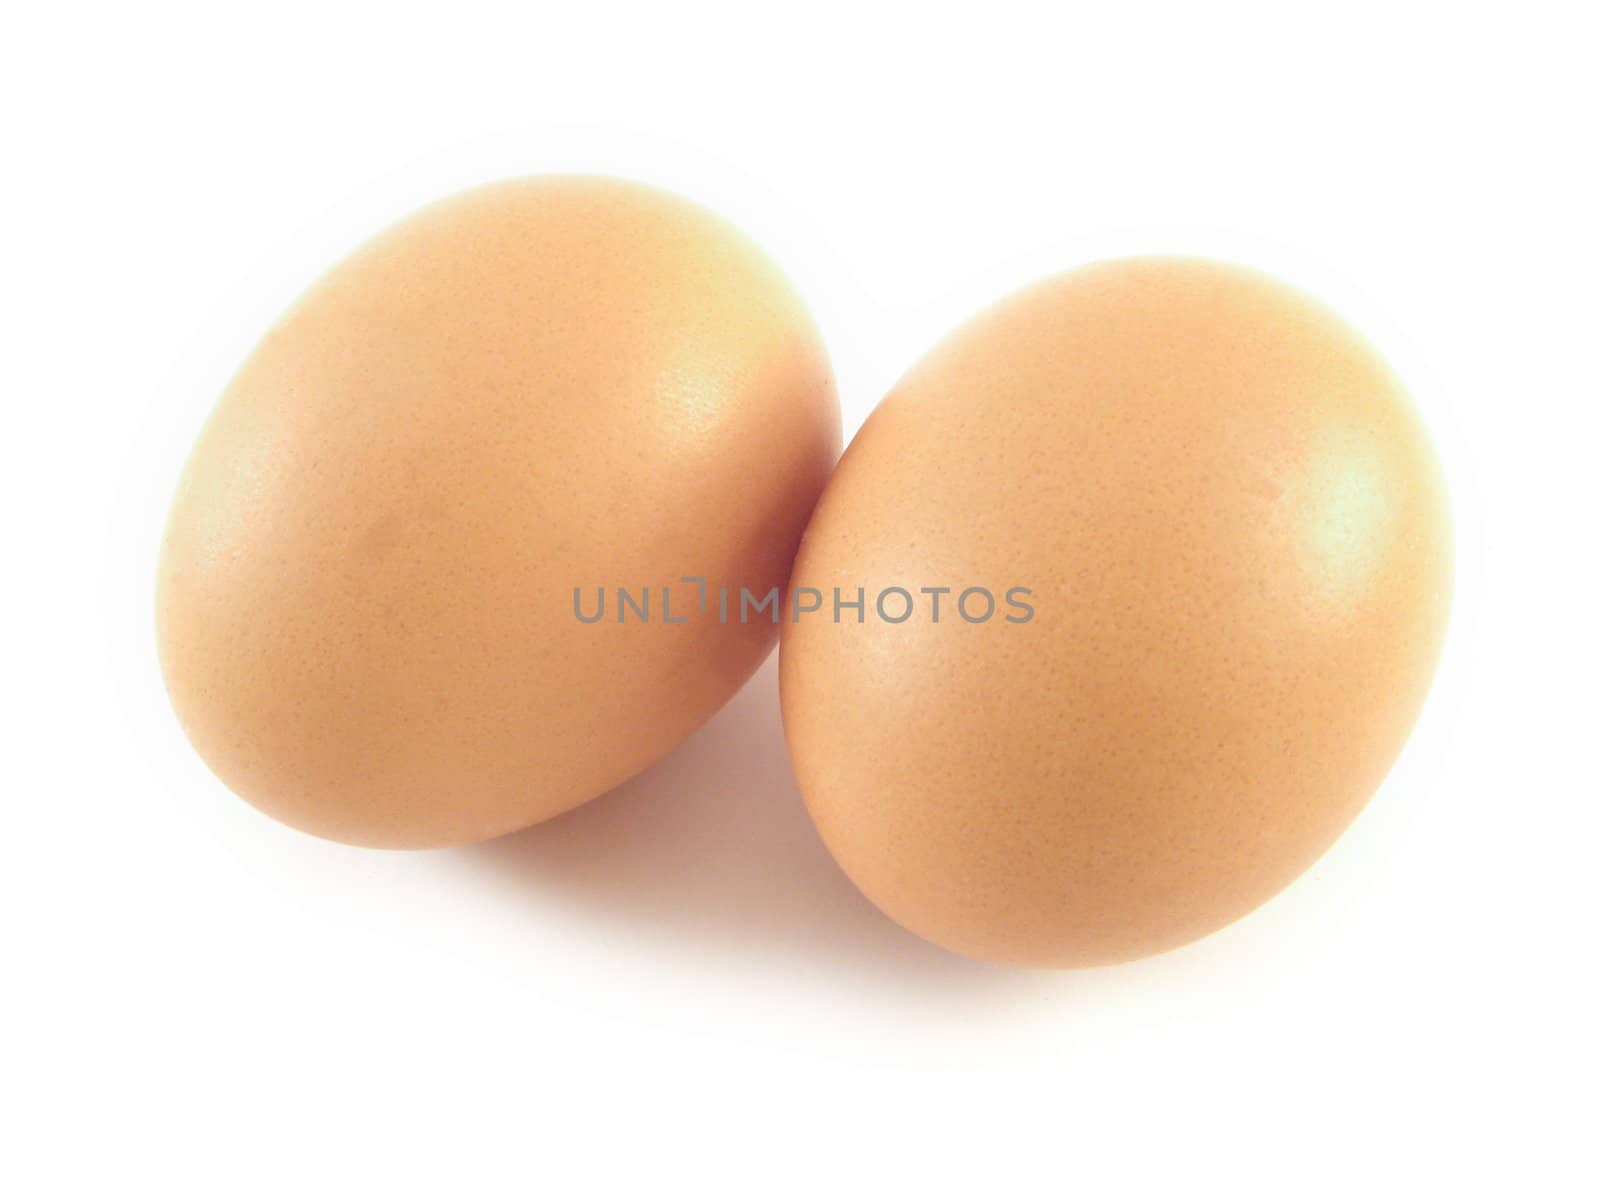 eggs by jbouzou